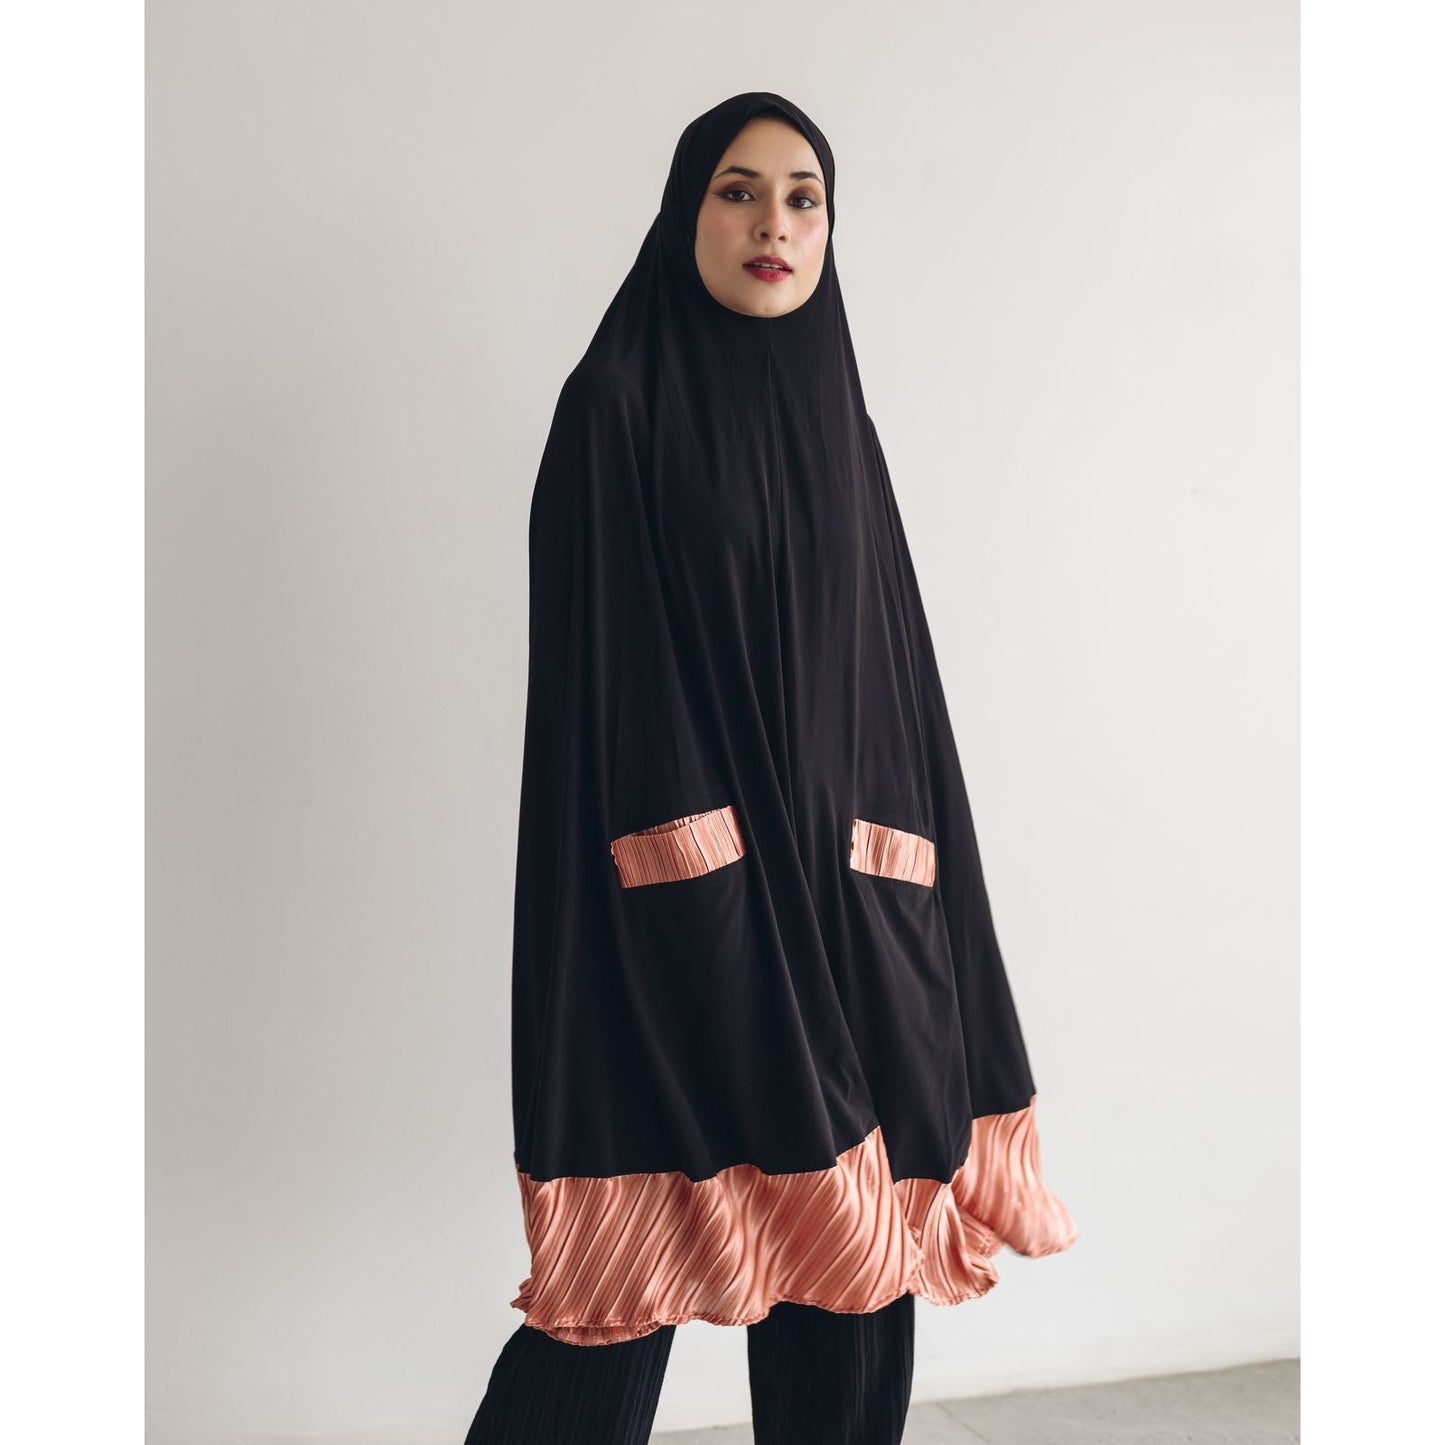 Pocket Burqa - Knee Length - Full Black with Coral (Plisse Edition)